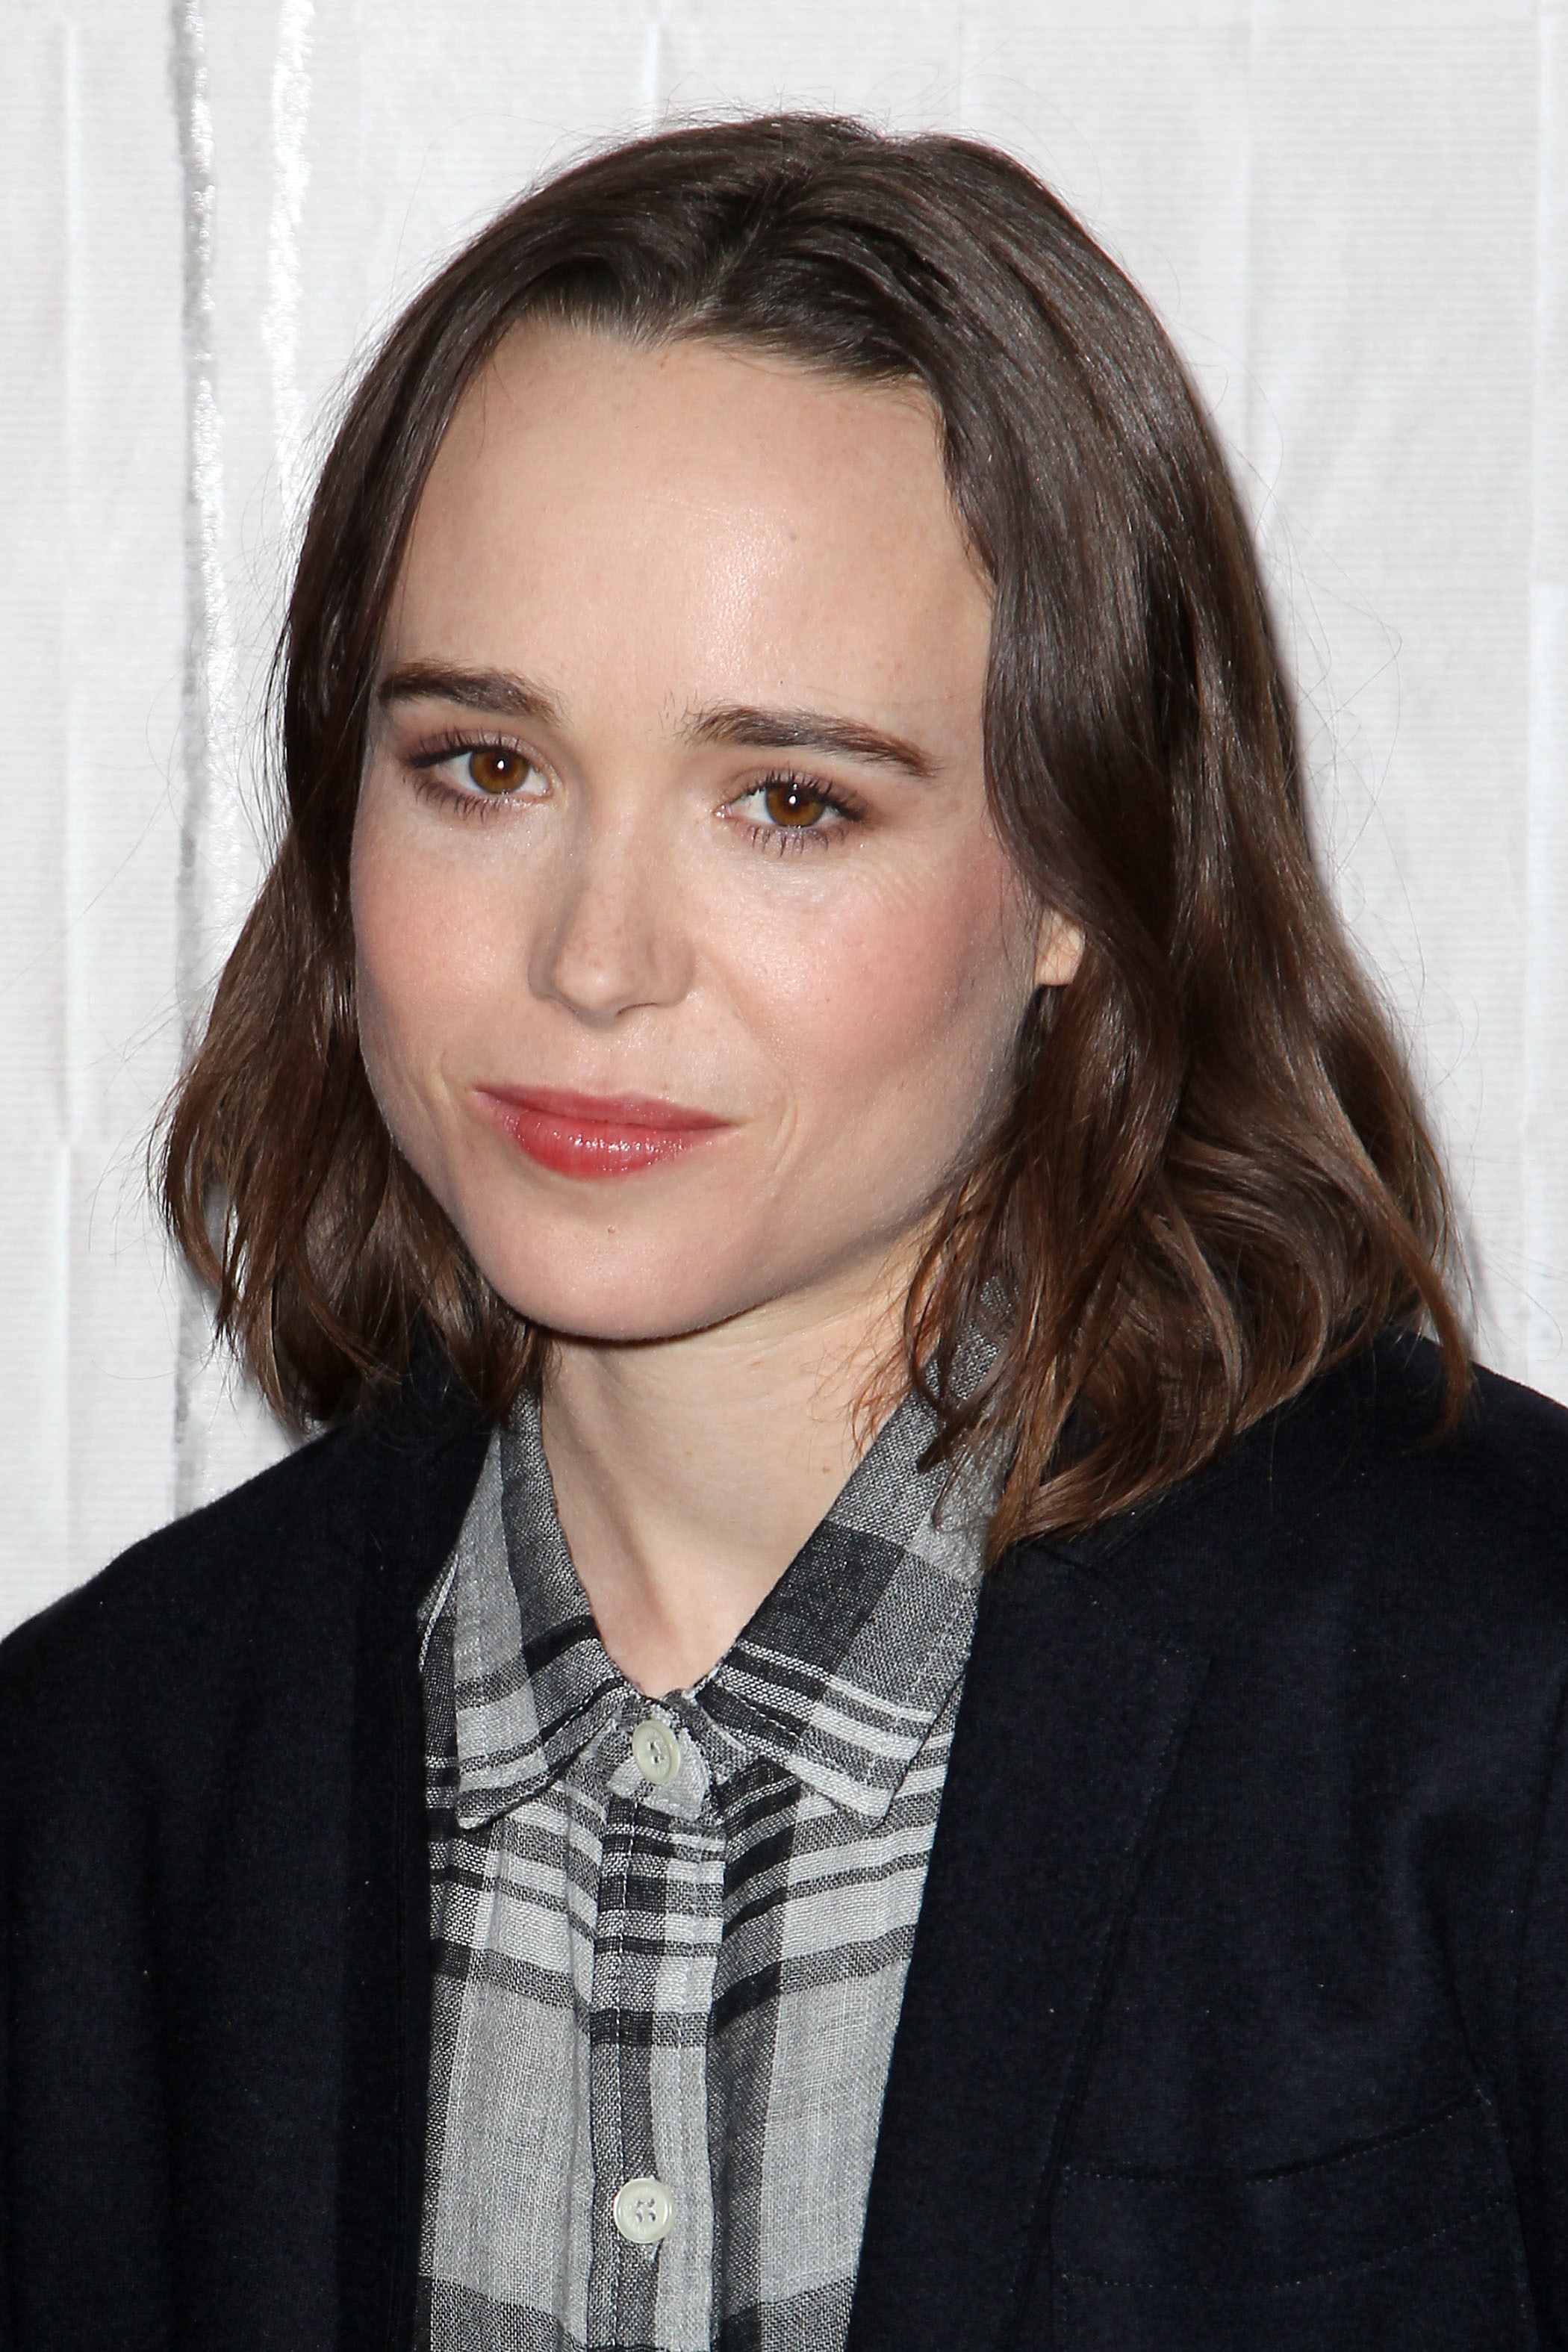 Ellen Page | Overview | Wonderwall.com
